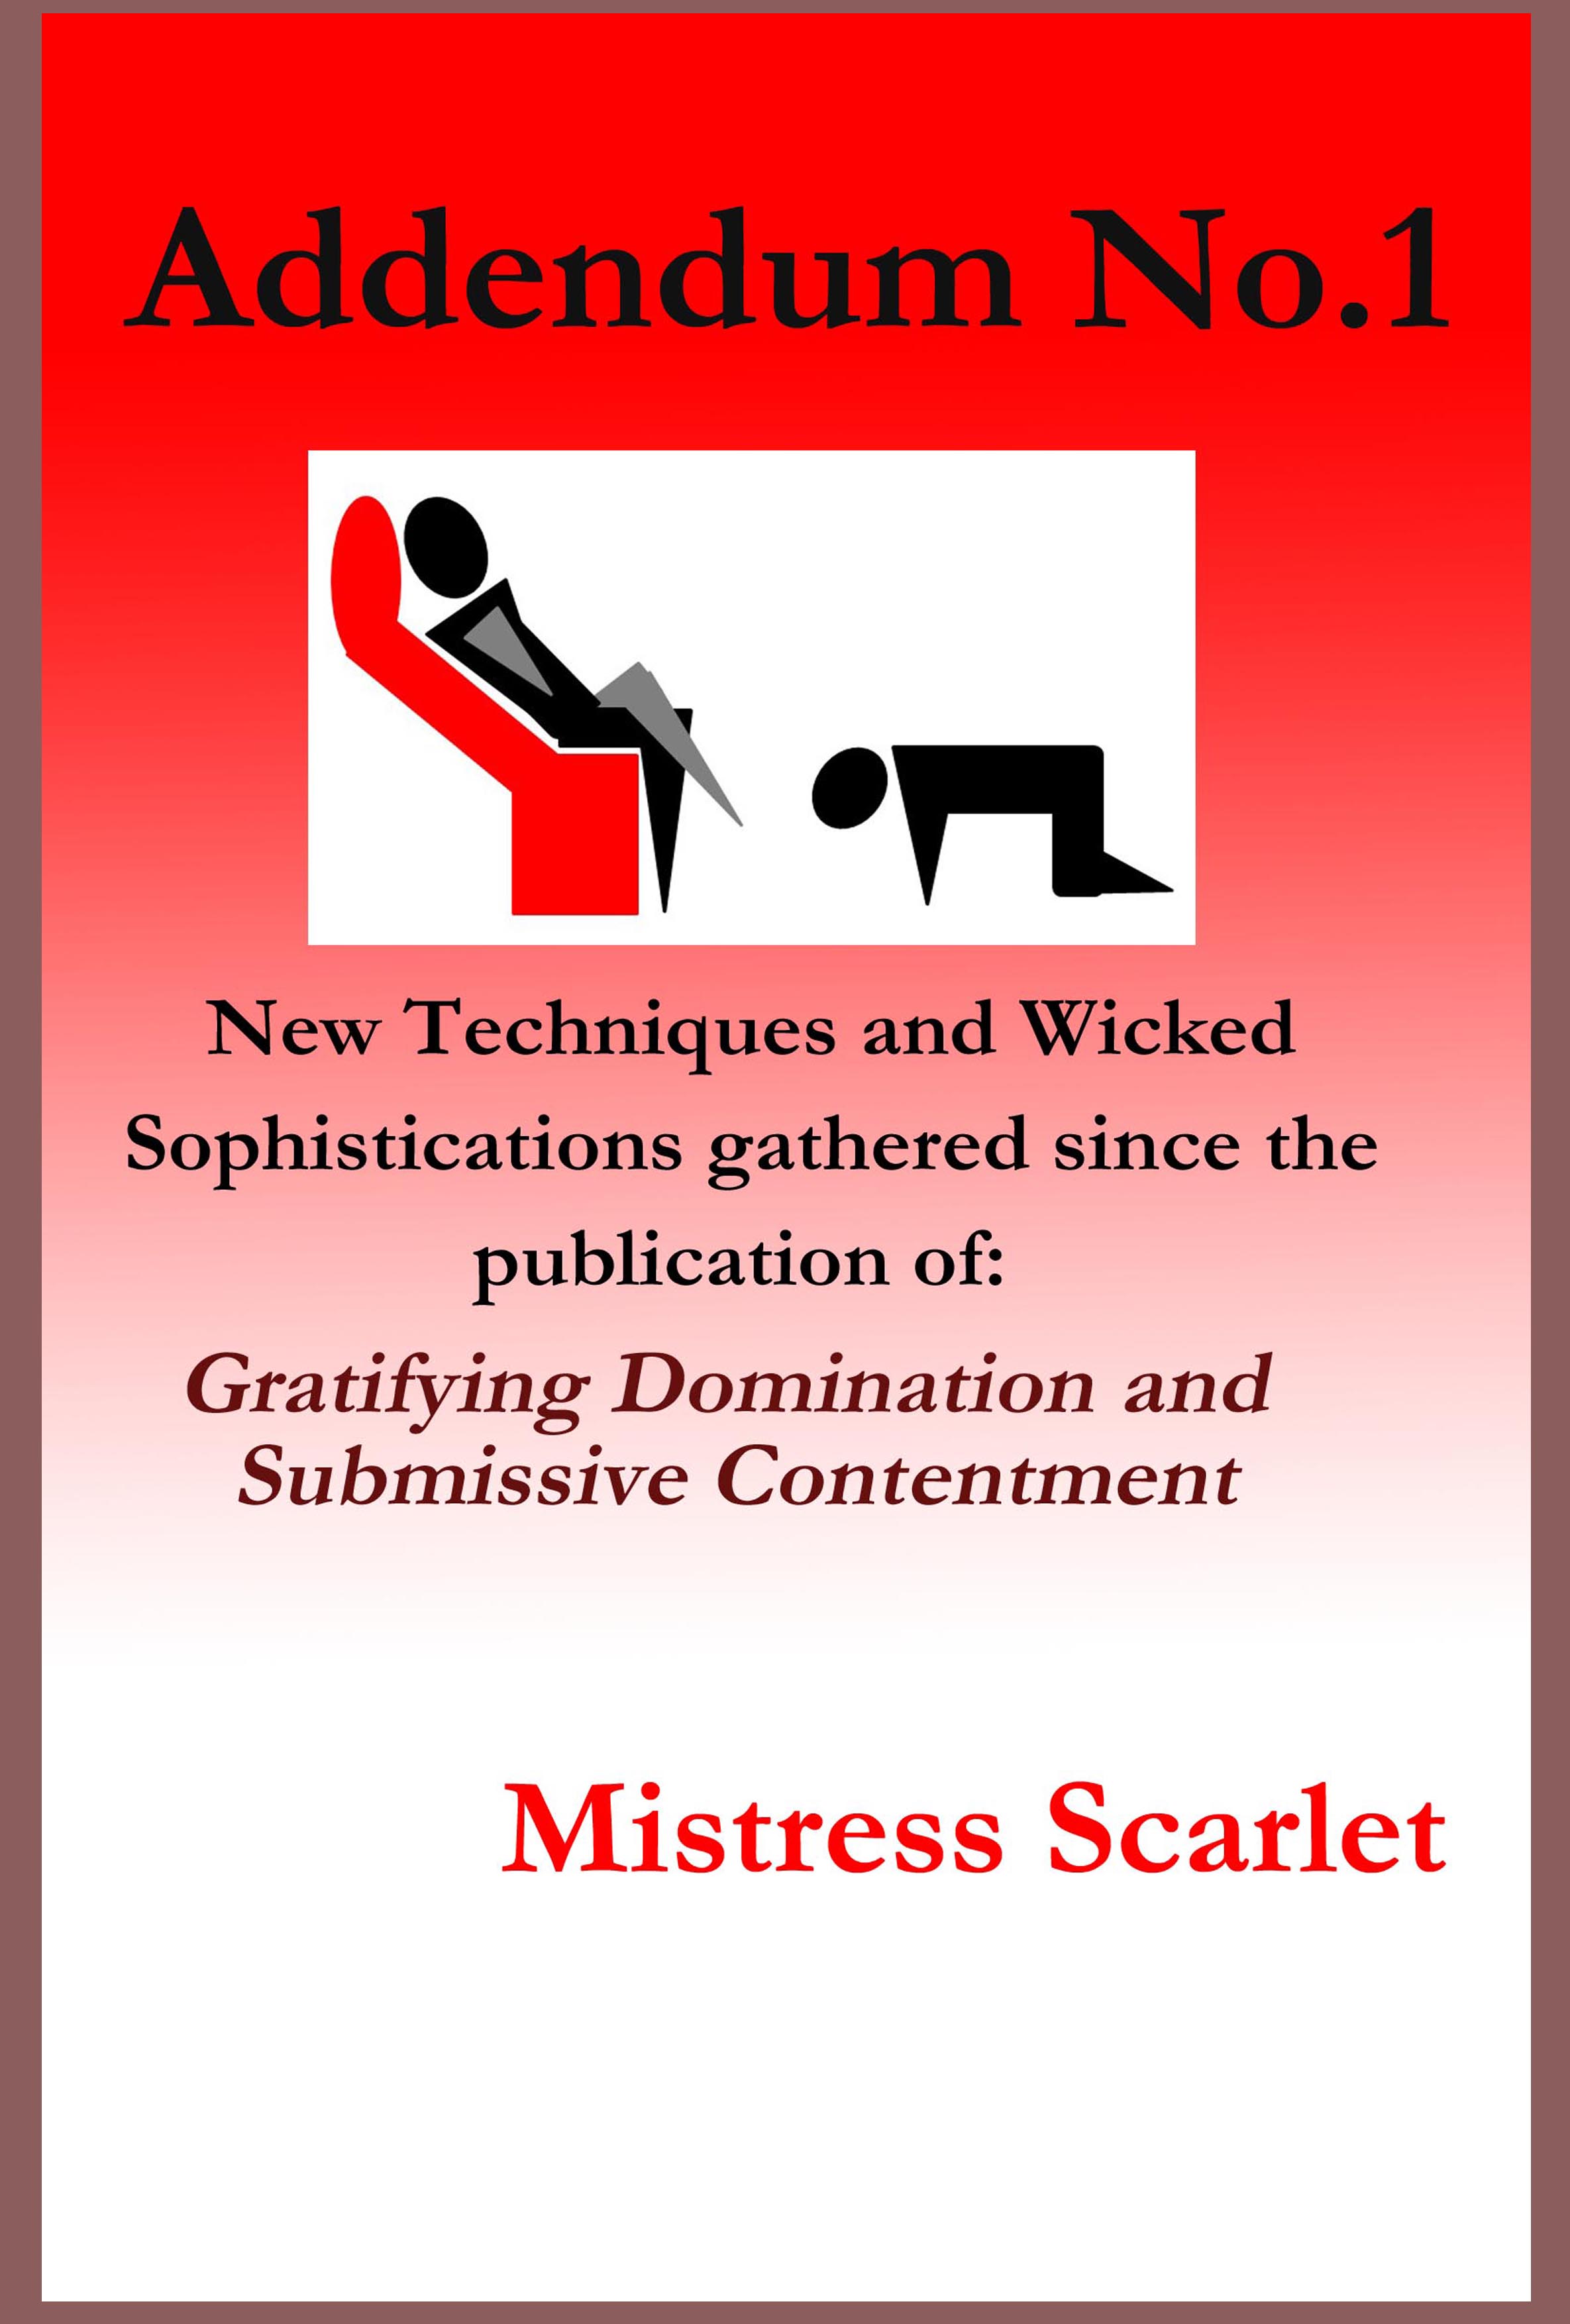 Forced diaper Use Mistress Scarlets Blog image